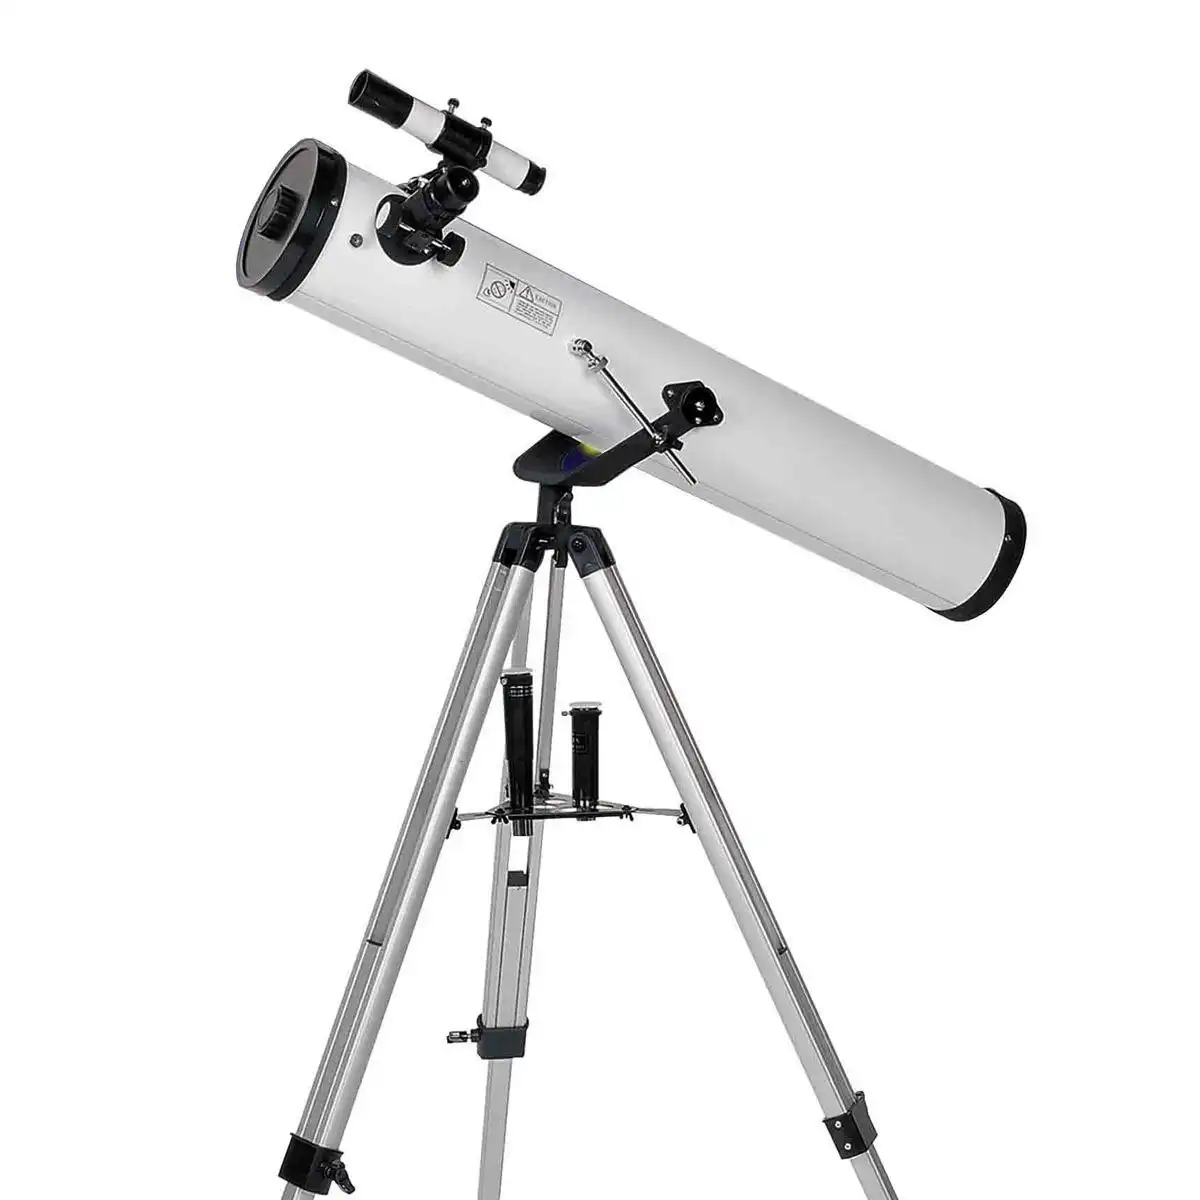 Ausway Astronomical Telescope 900mm Focal Length 114mm Aperture